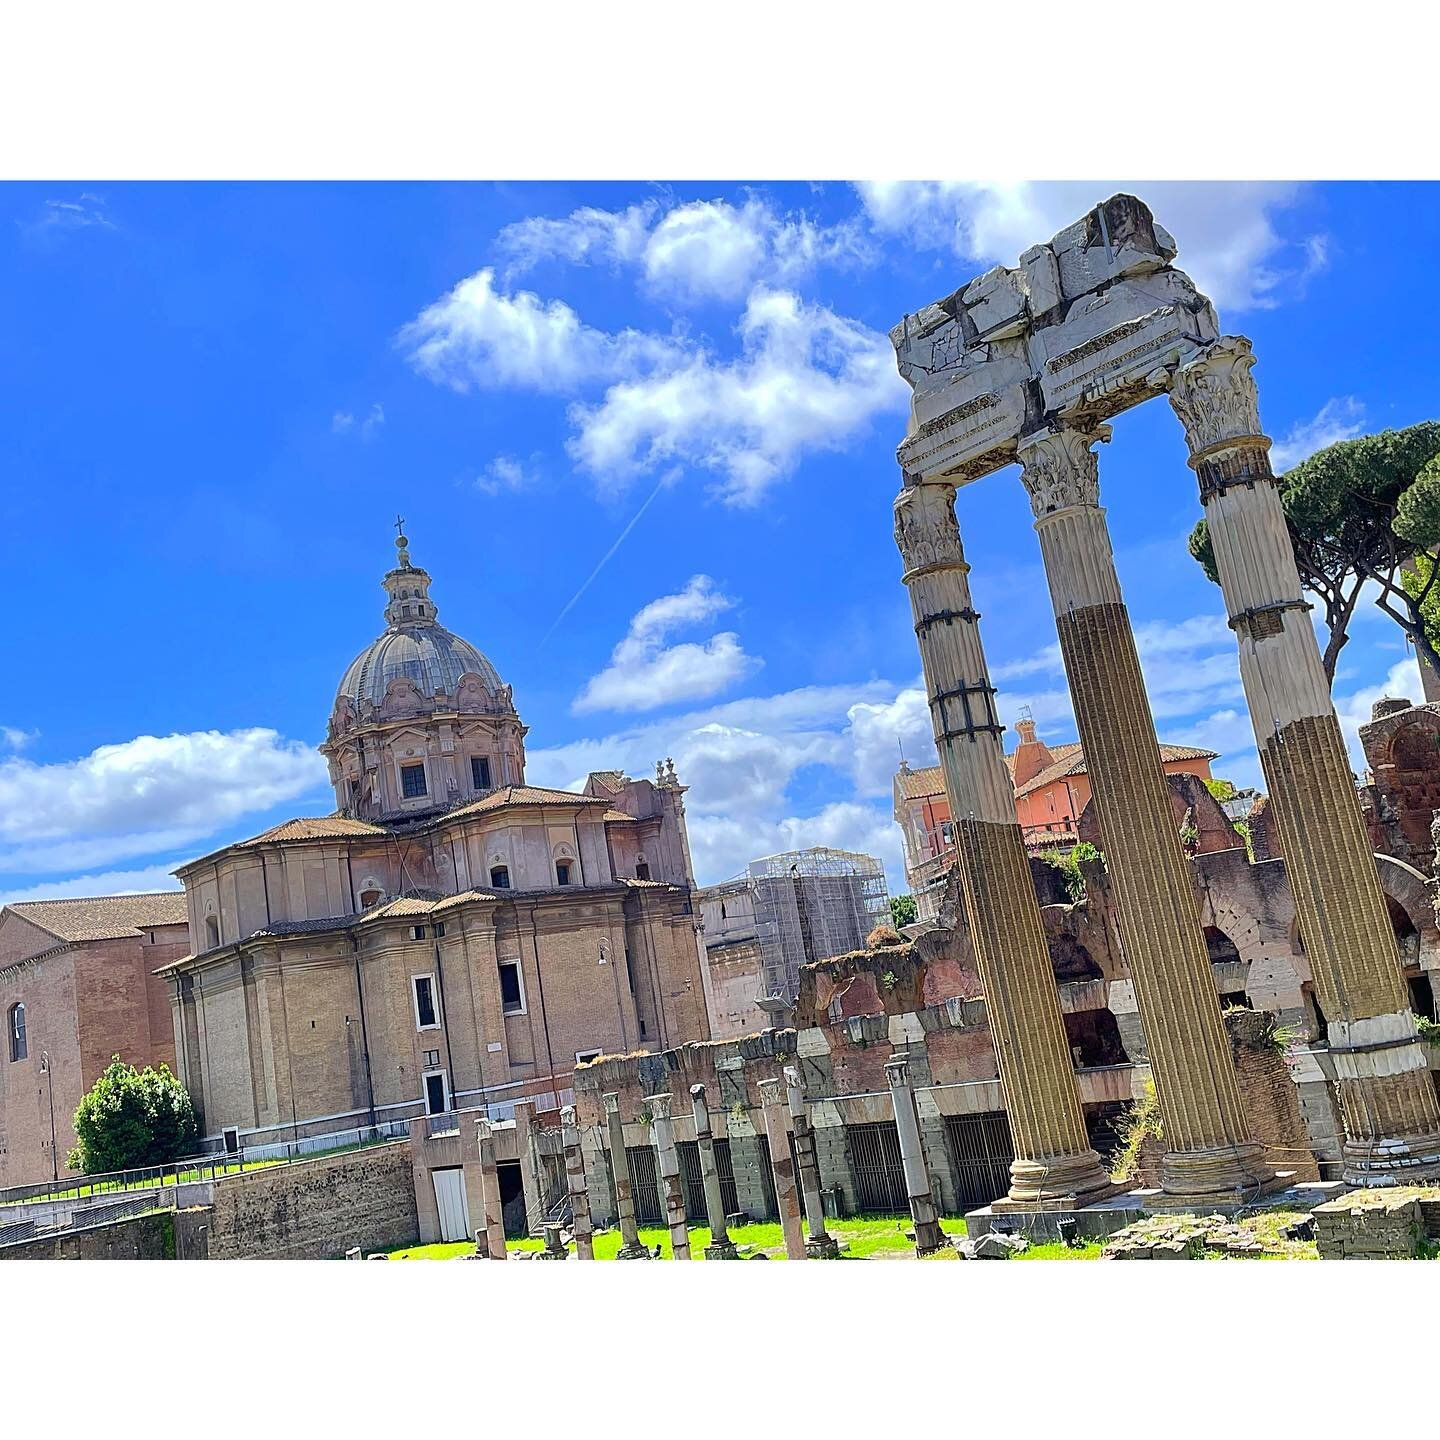 .
Roman ruin relics running rampant 

Rome! 🇮🇹🤯